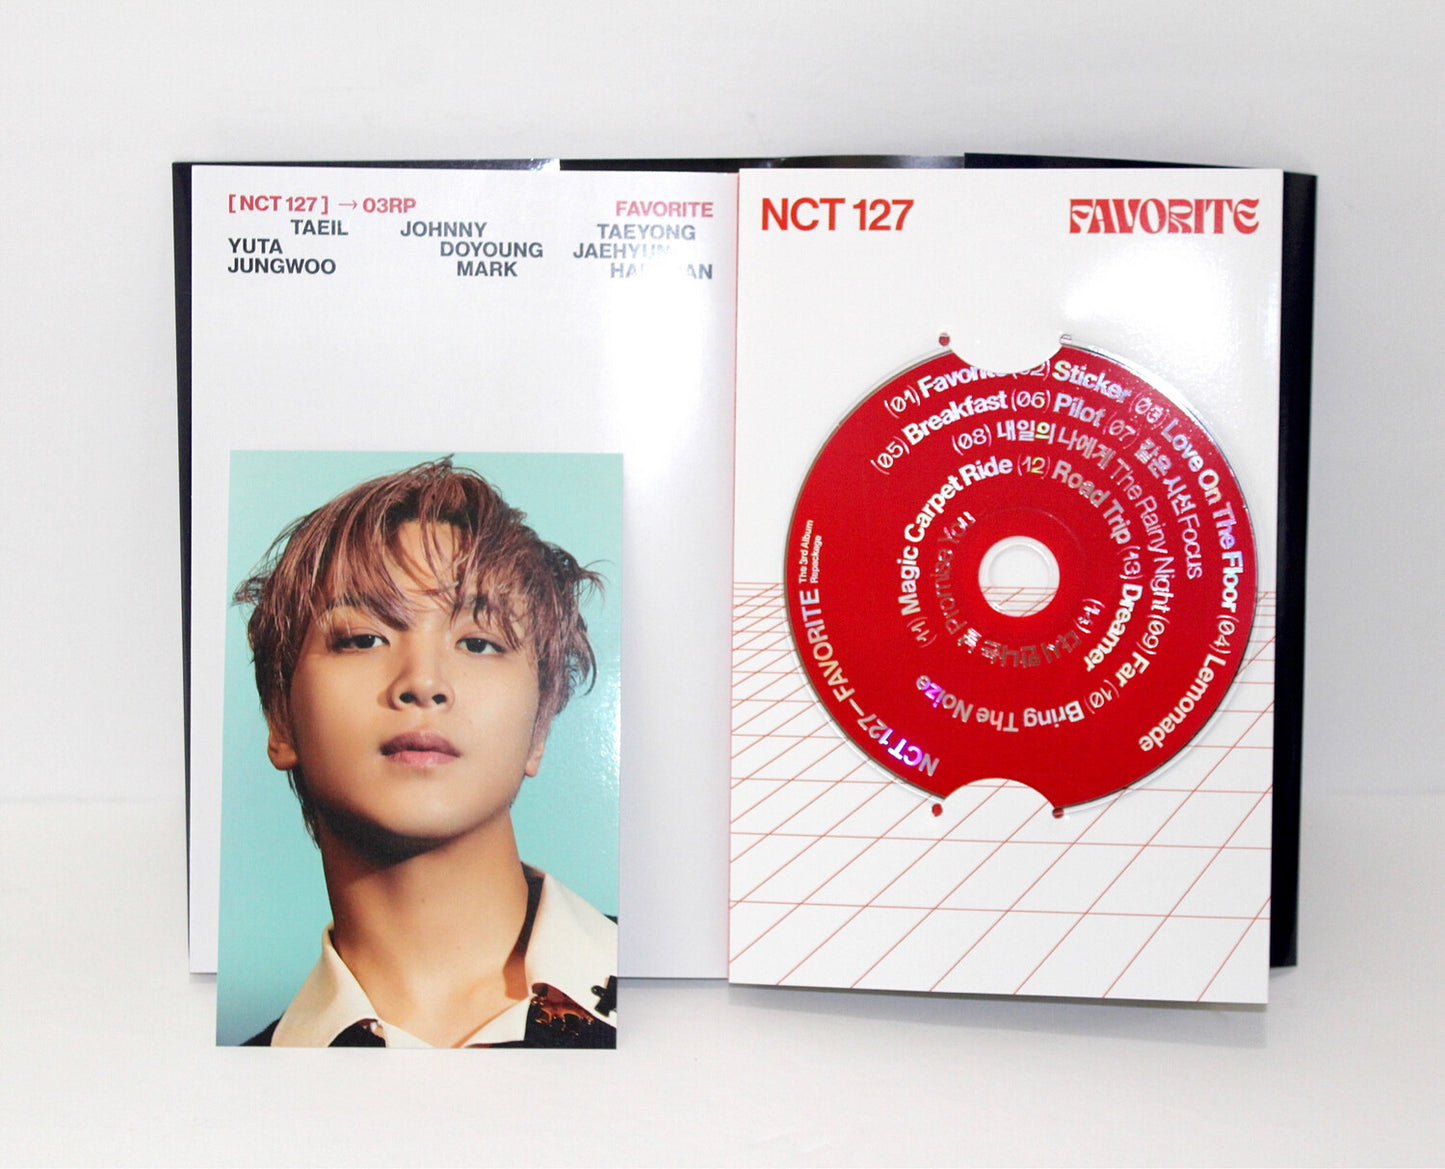 NCT 127 3rd Album Repackage: Favorite | Classic Ver.